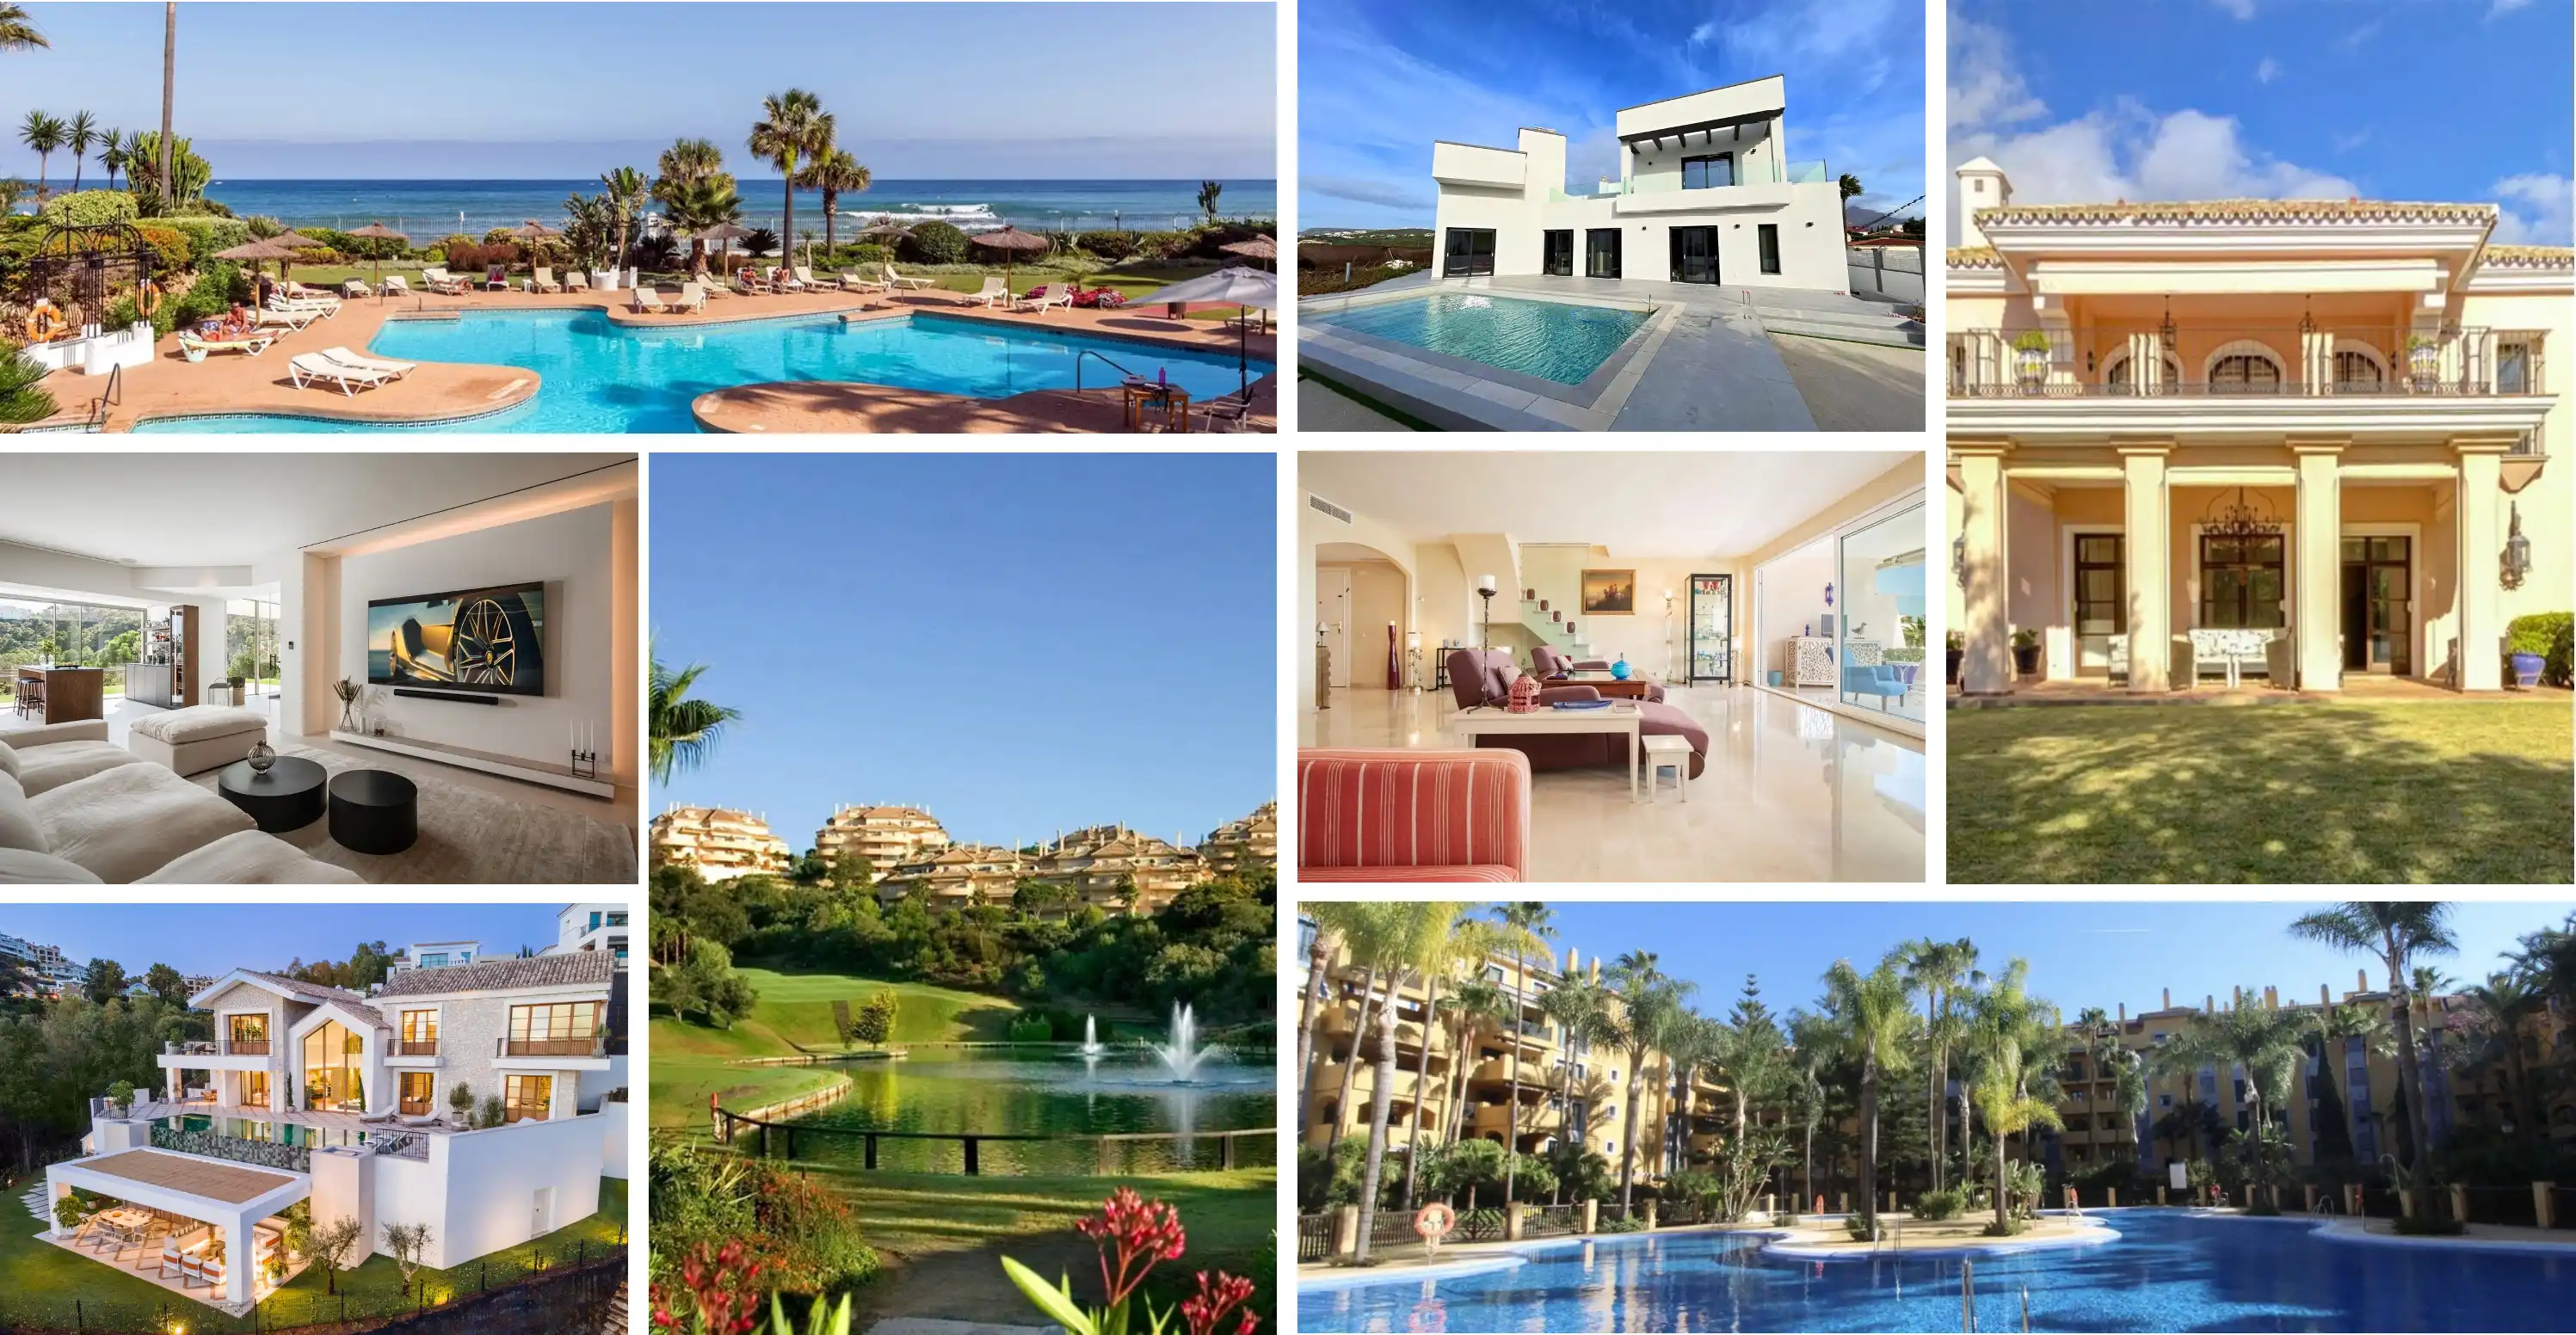 How to buy property in Marbella Spain